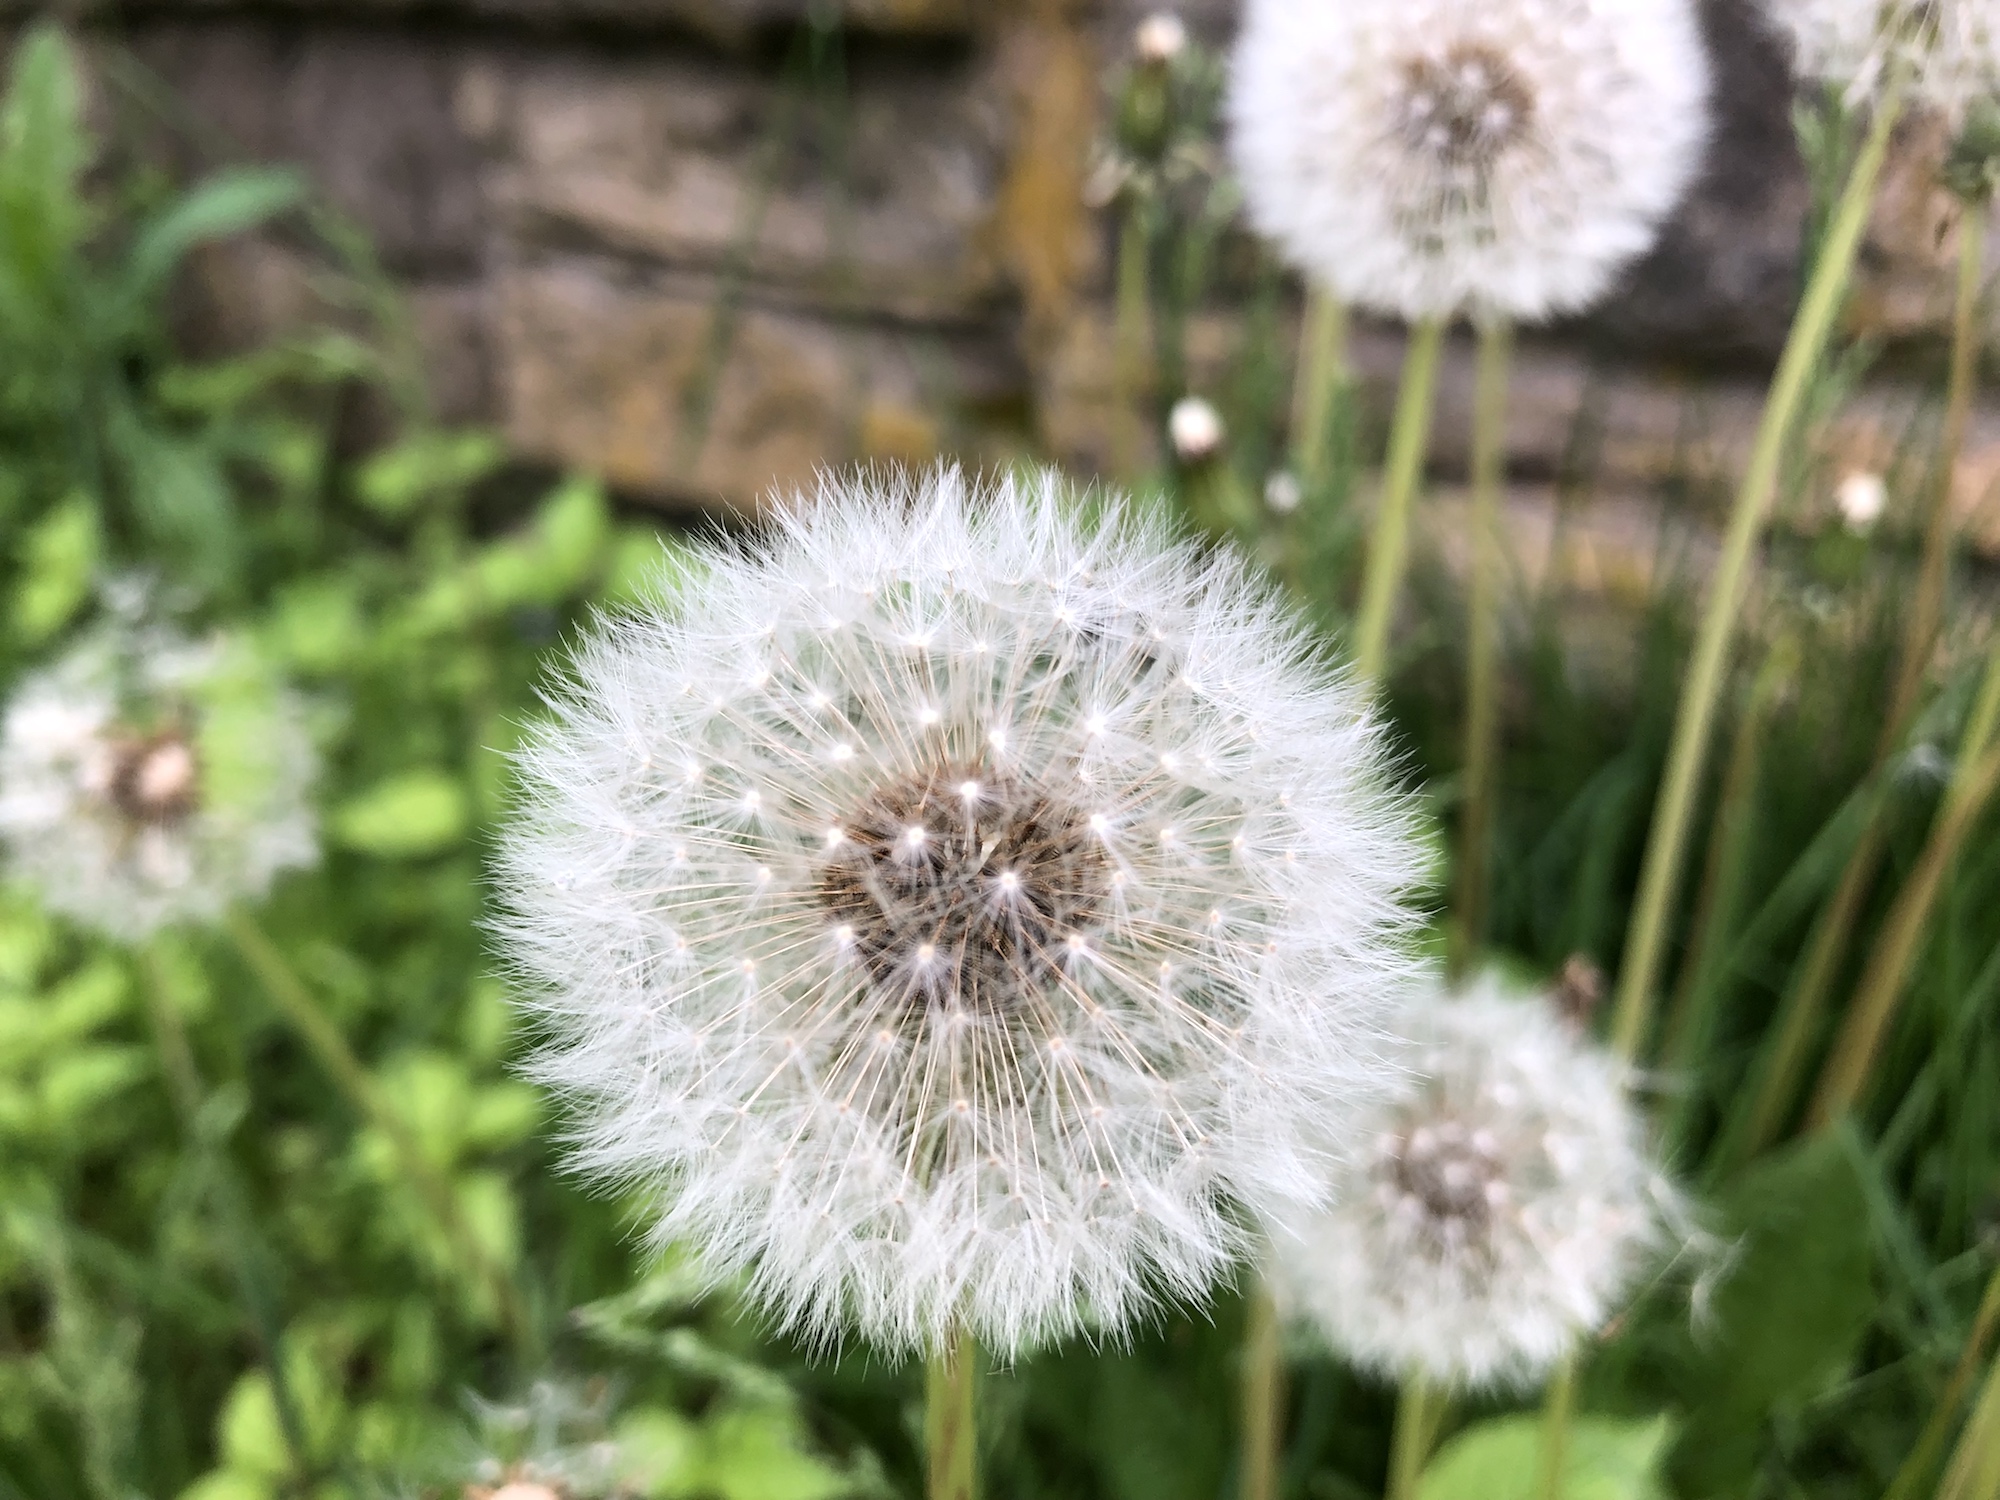 Dandelion puffballs near Duck Pond wall on May 30, 2019.